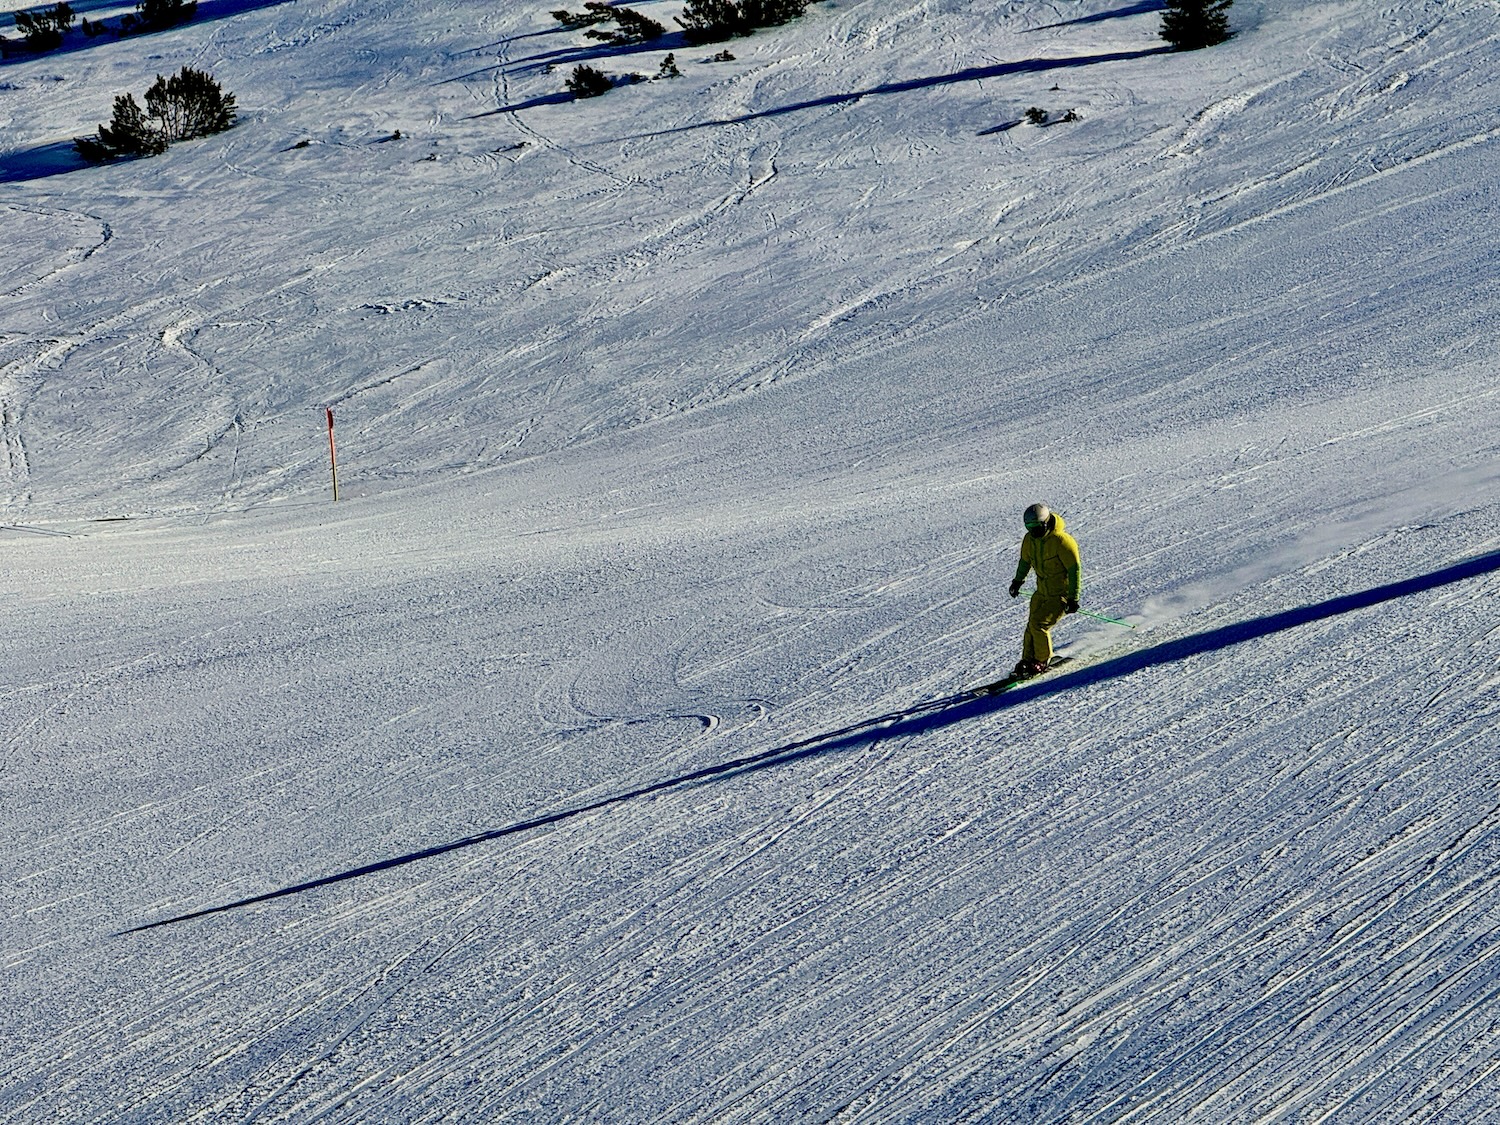 Rondom Fieberbrunn vind je pistes voor beginners en professionals. Foto: Sascha Tegtmeyer skivakantie in Fieberbrunn wintervakantie reisverslag ervaringsverslag ervaringen